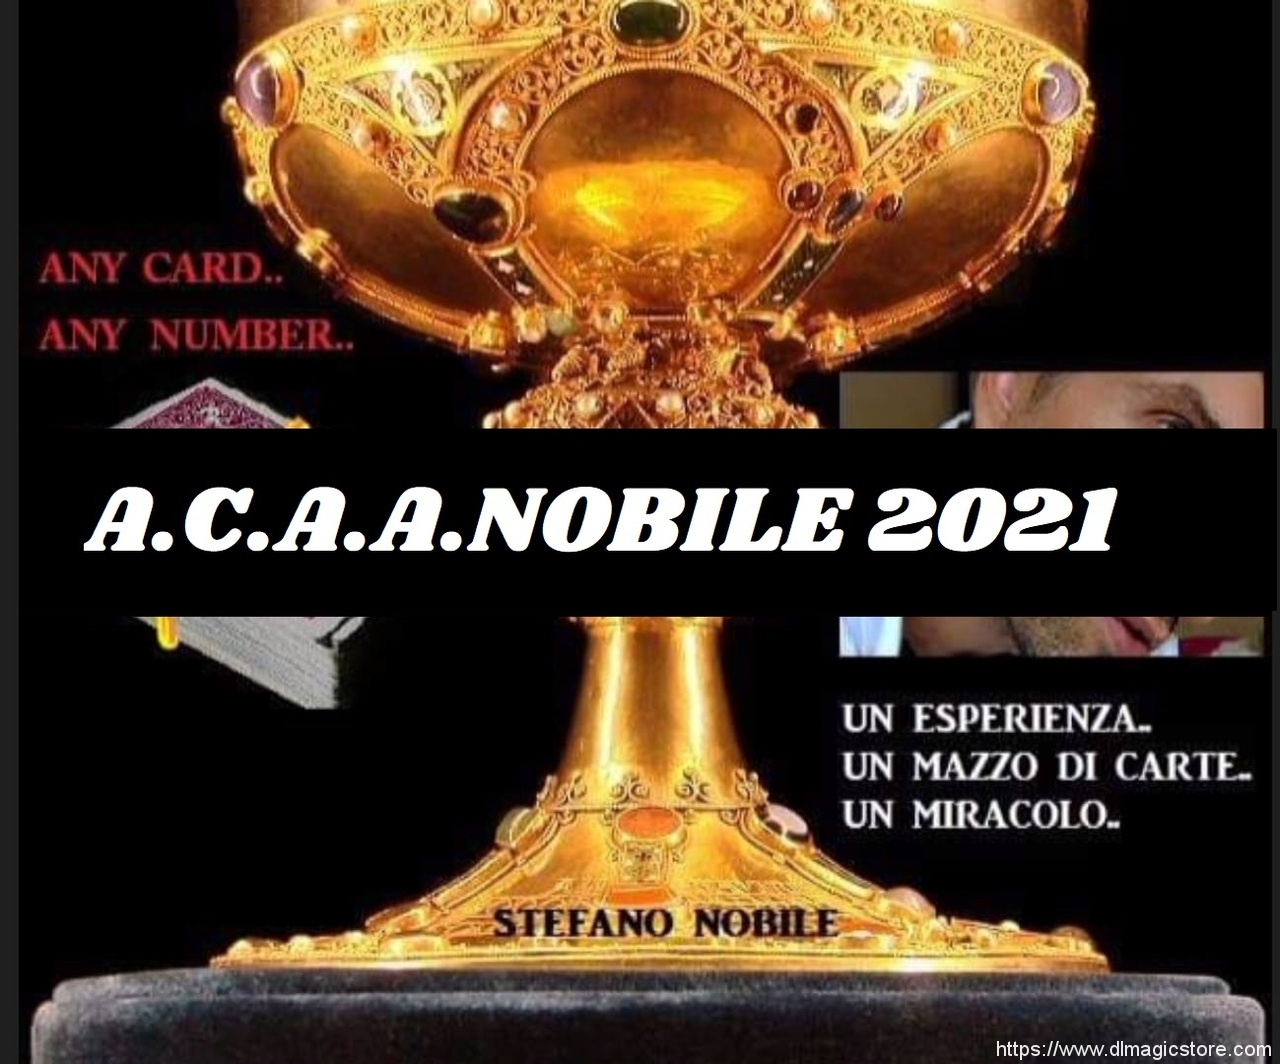 A.C.A.A.Nobile 2021 by Stefano Nobile